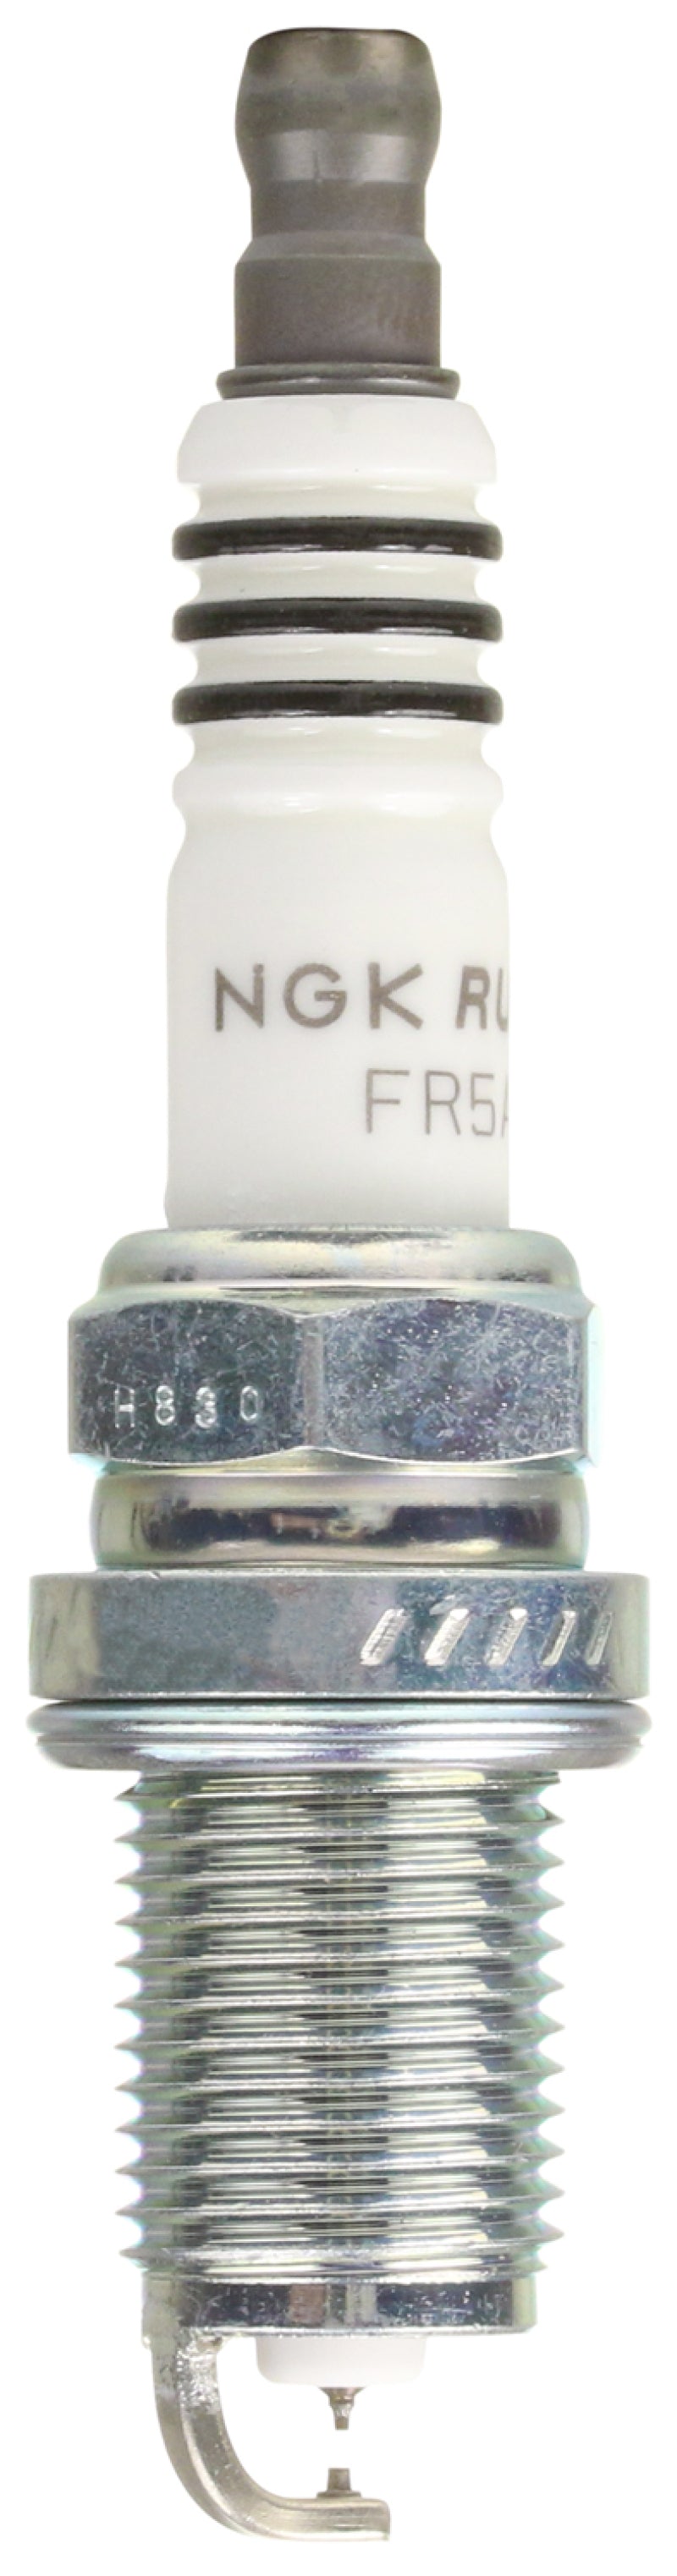 NGK Ruthenium HX Spark Plug Box of 4 (FR5AHX)